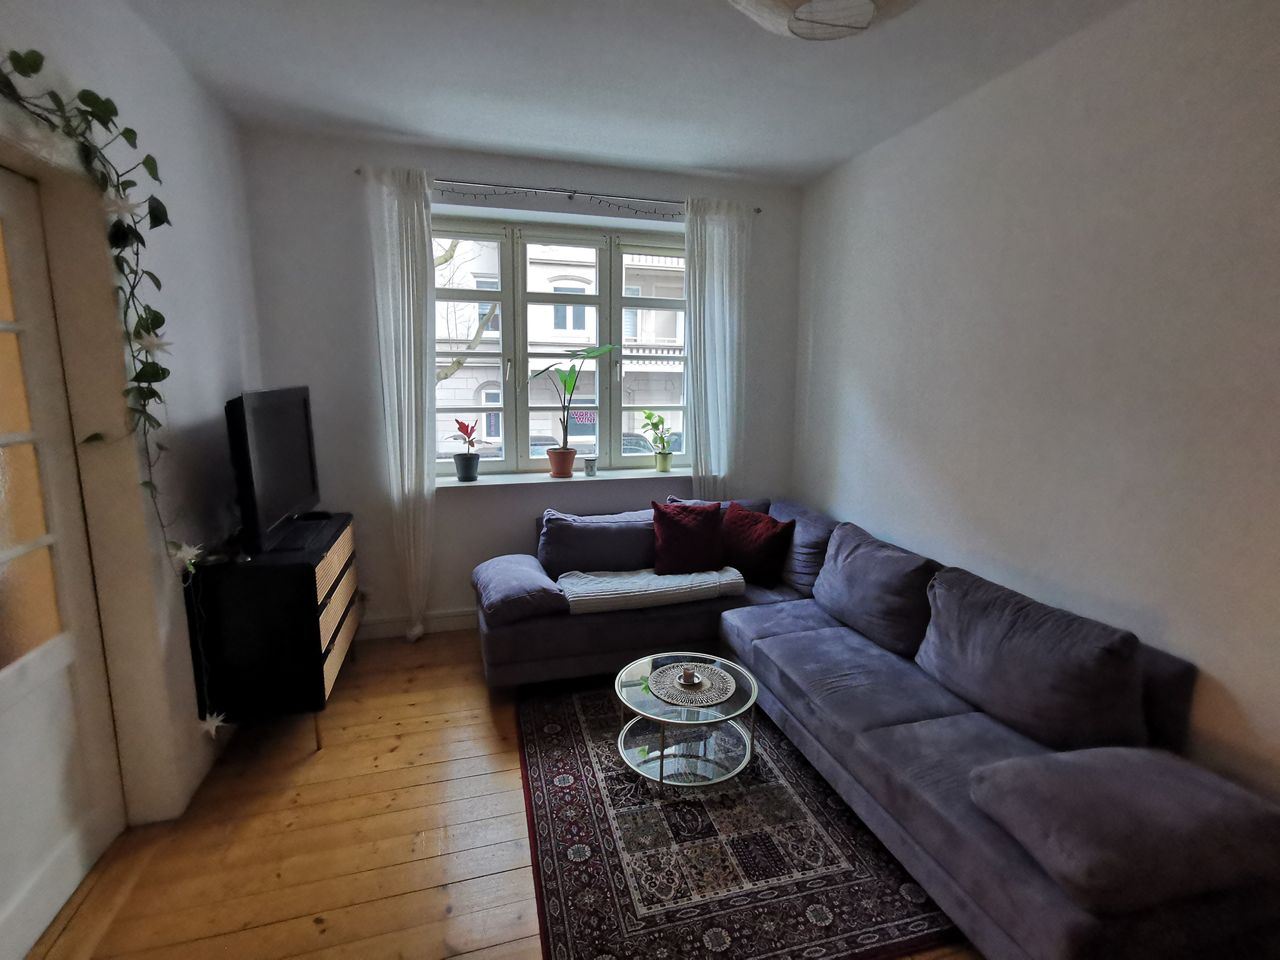 Spacious apartment in great location near Blücherplatz